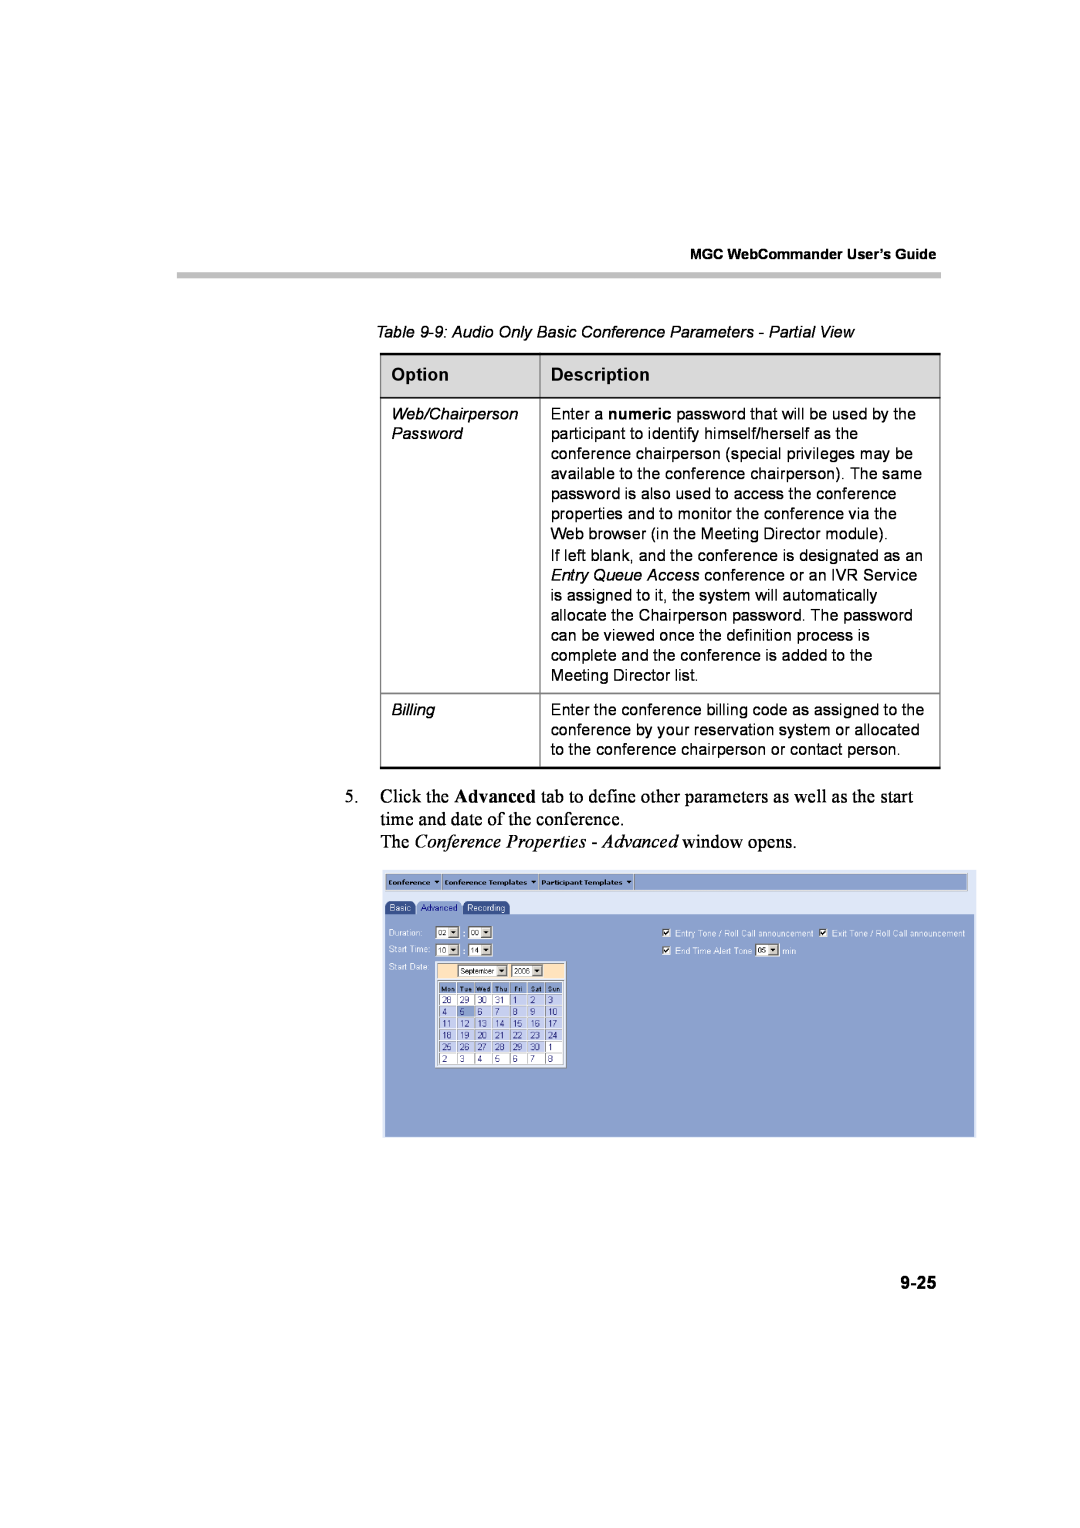 Polycom 8 manual The Conference Properties - Advanced window opens, Option, Description, 9-25 